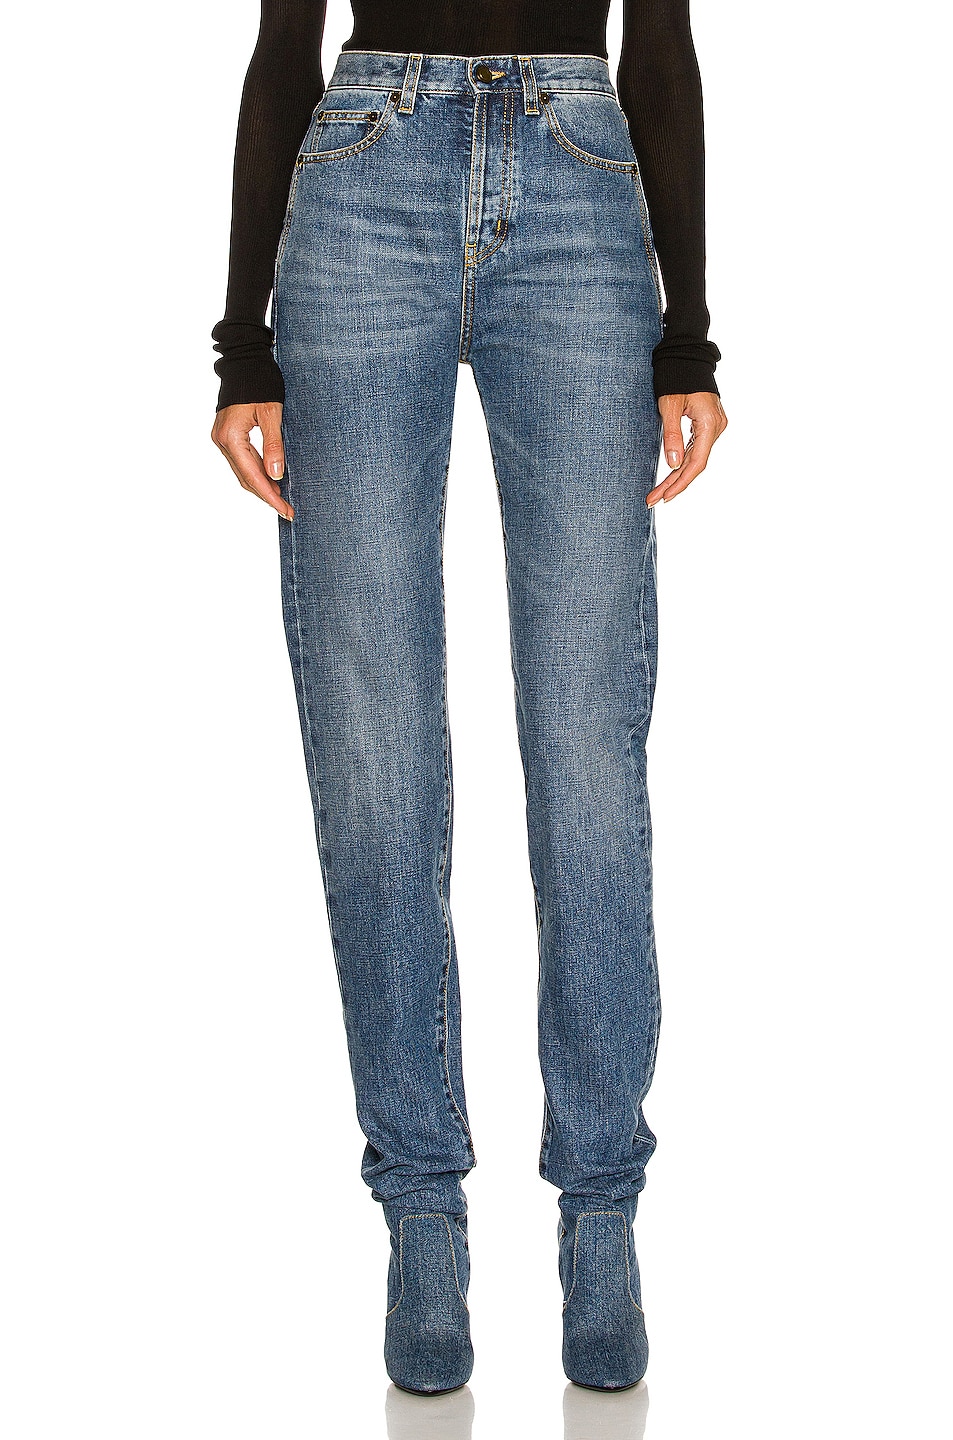 Image 1 of Saint Laurent Koller Pantaboots in Scratch Blue Jeans